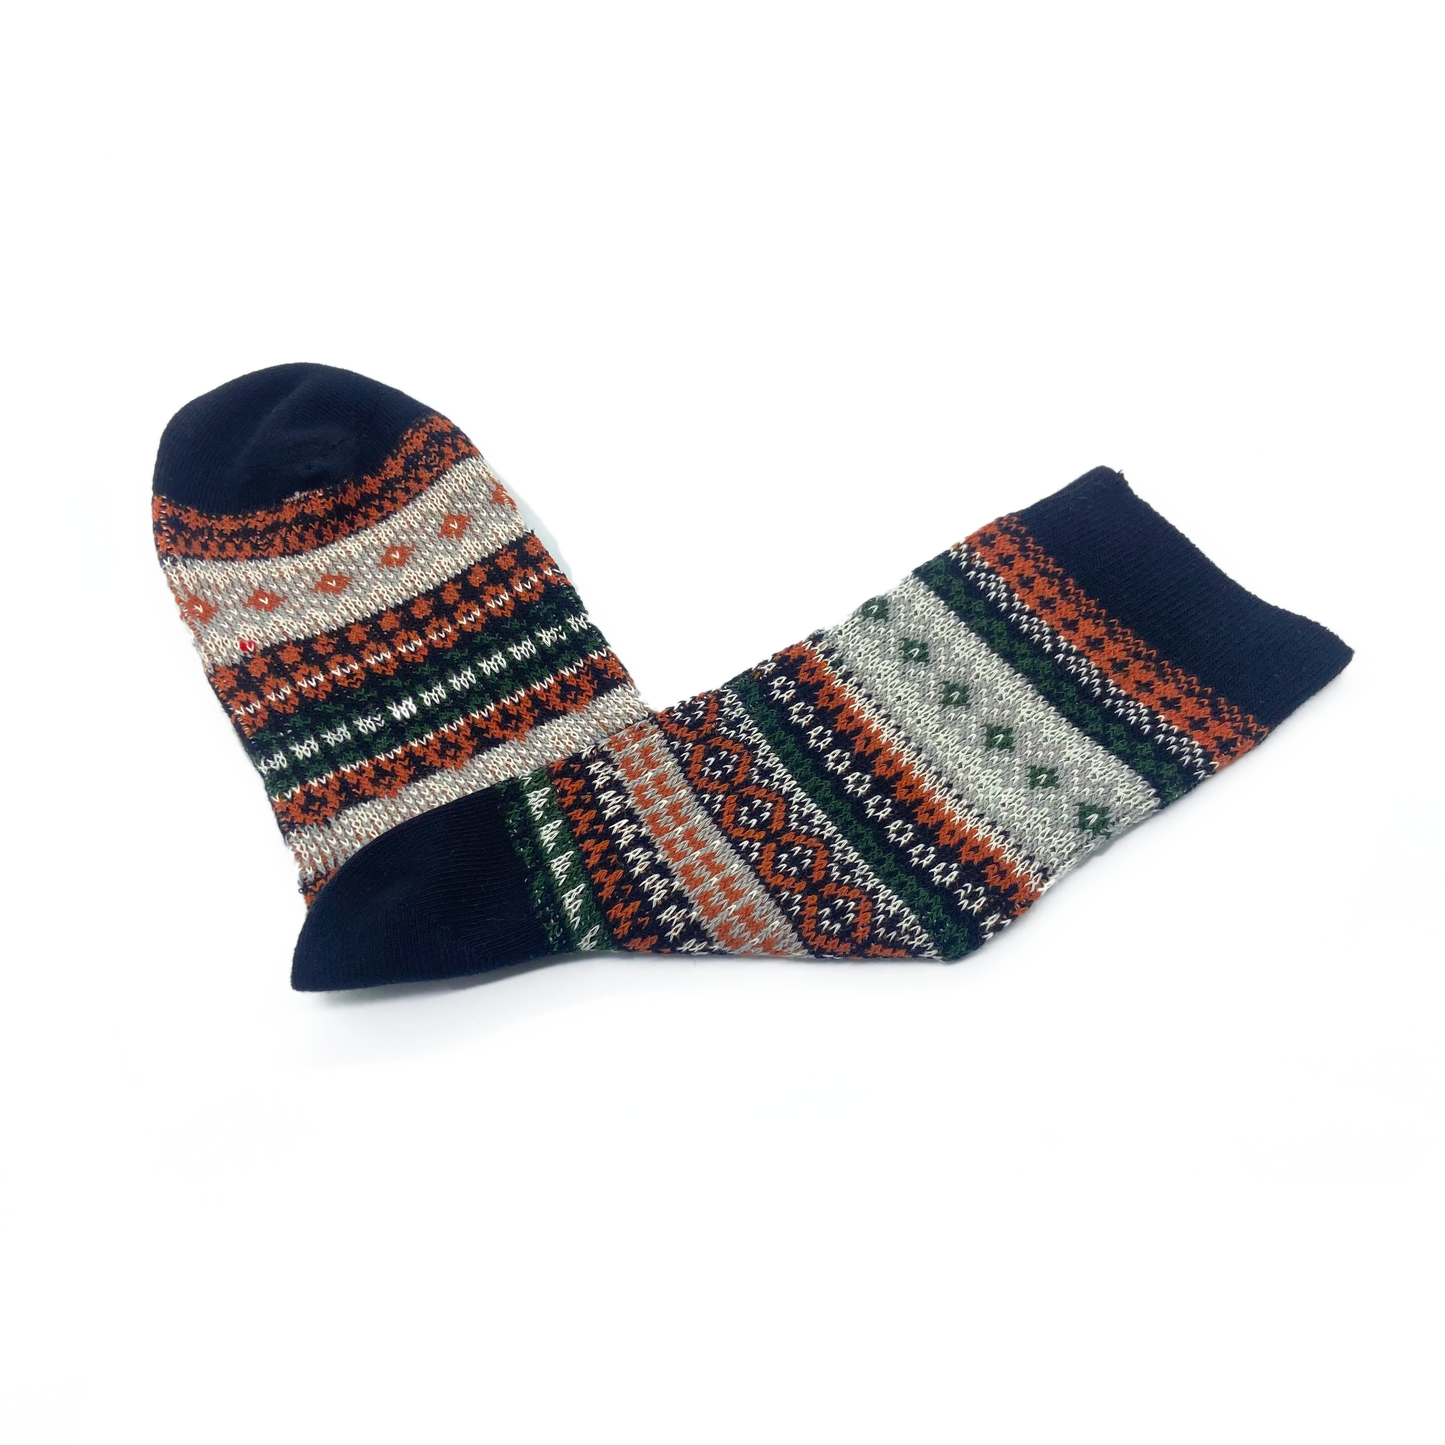 budapest socks - stripe tribal pattern sock